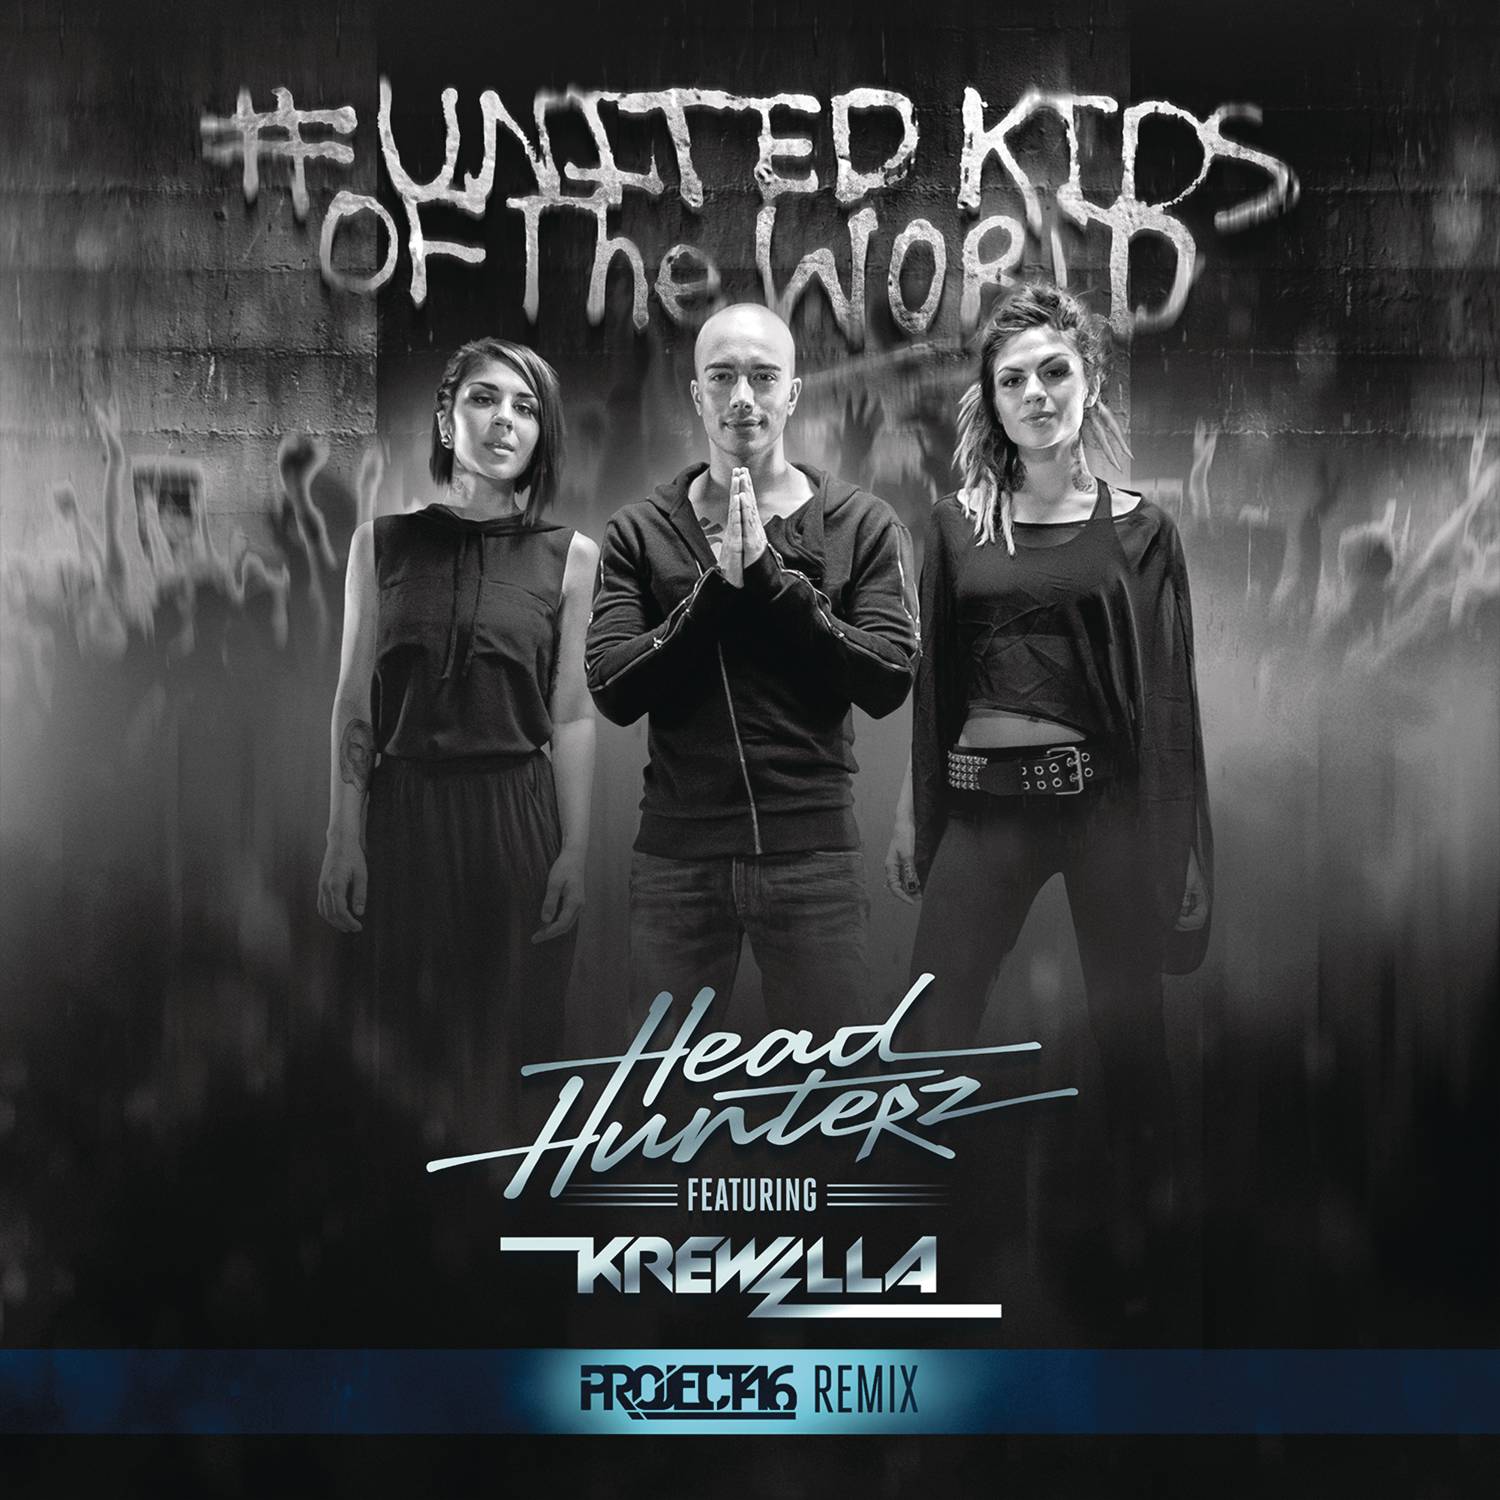 United Kids Of The World feat. Krewella (Project 46 Remix)